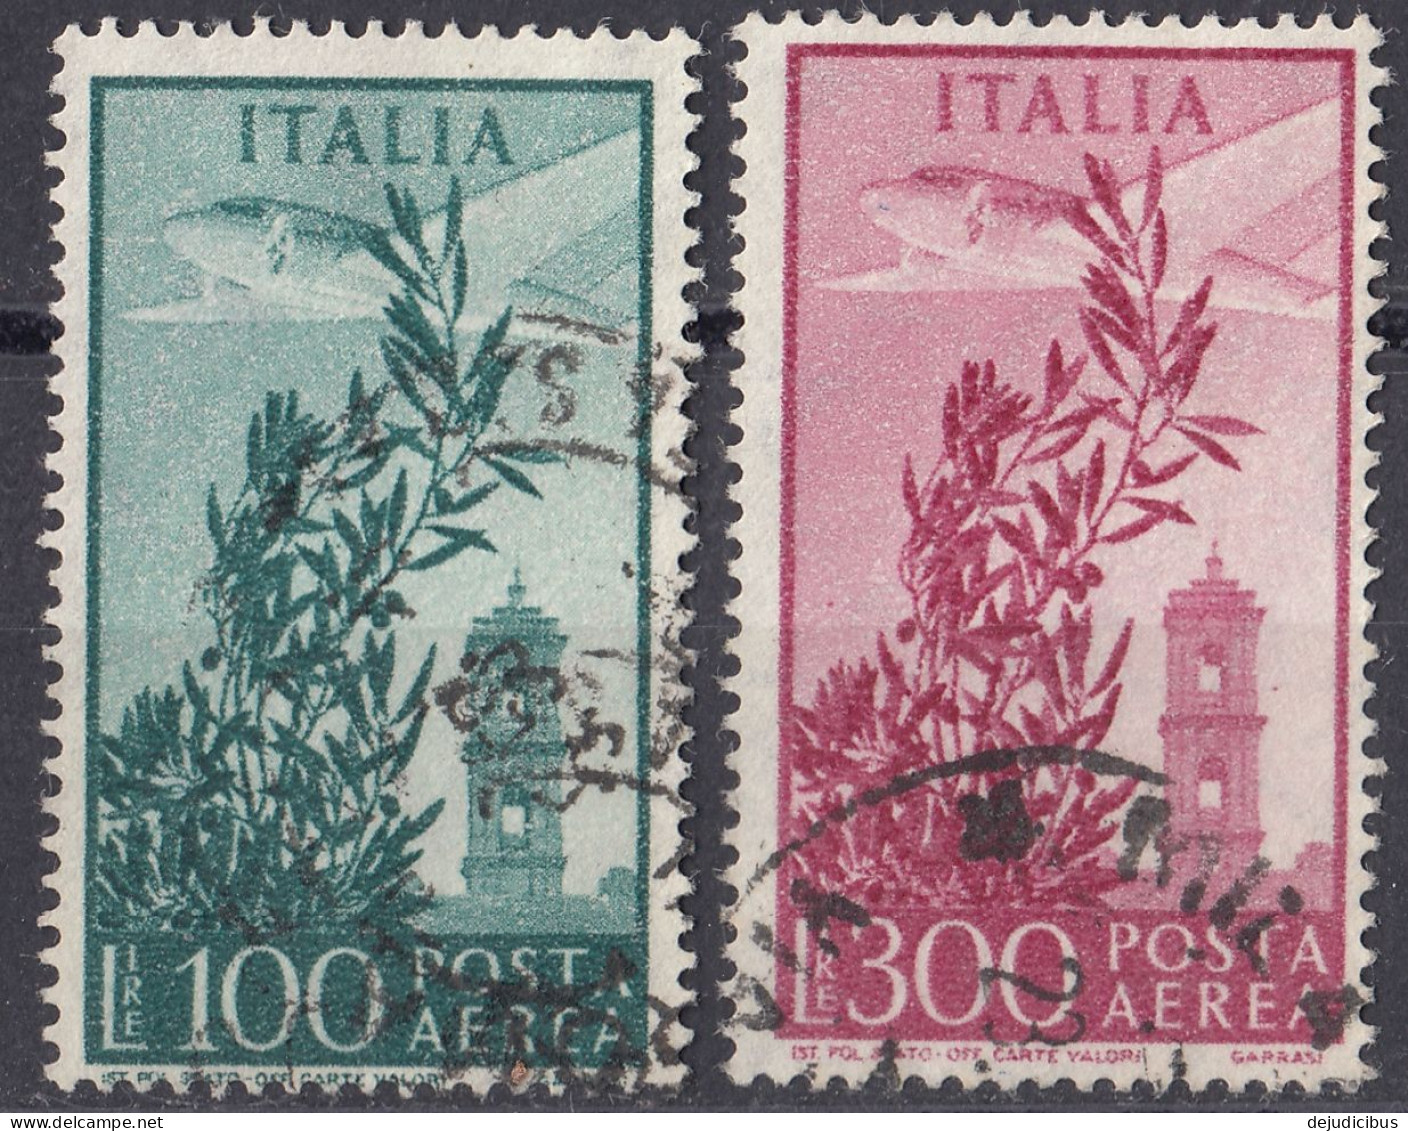 ITALIA - 1955/1959 - Serie Completa Usata Formata Da 2 Valori: Yvert Posta Aerea 136/137. - Airmail